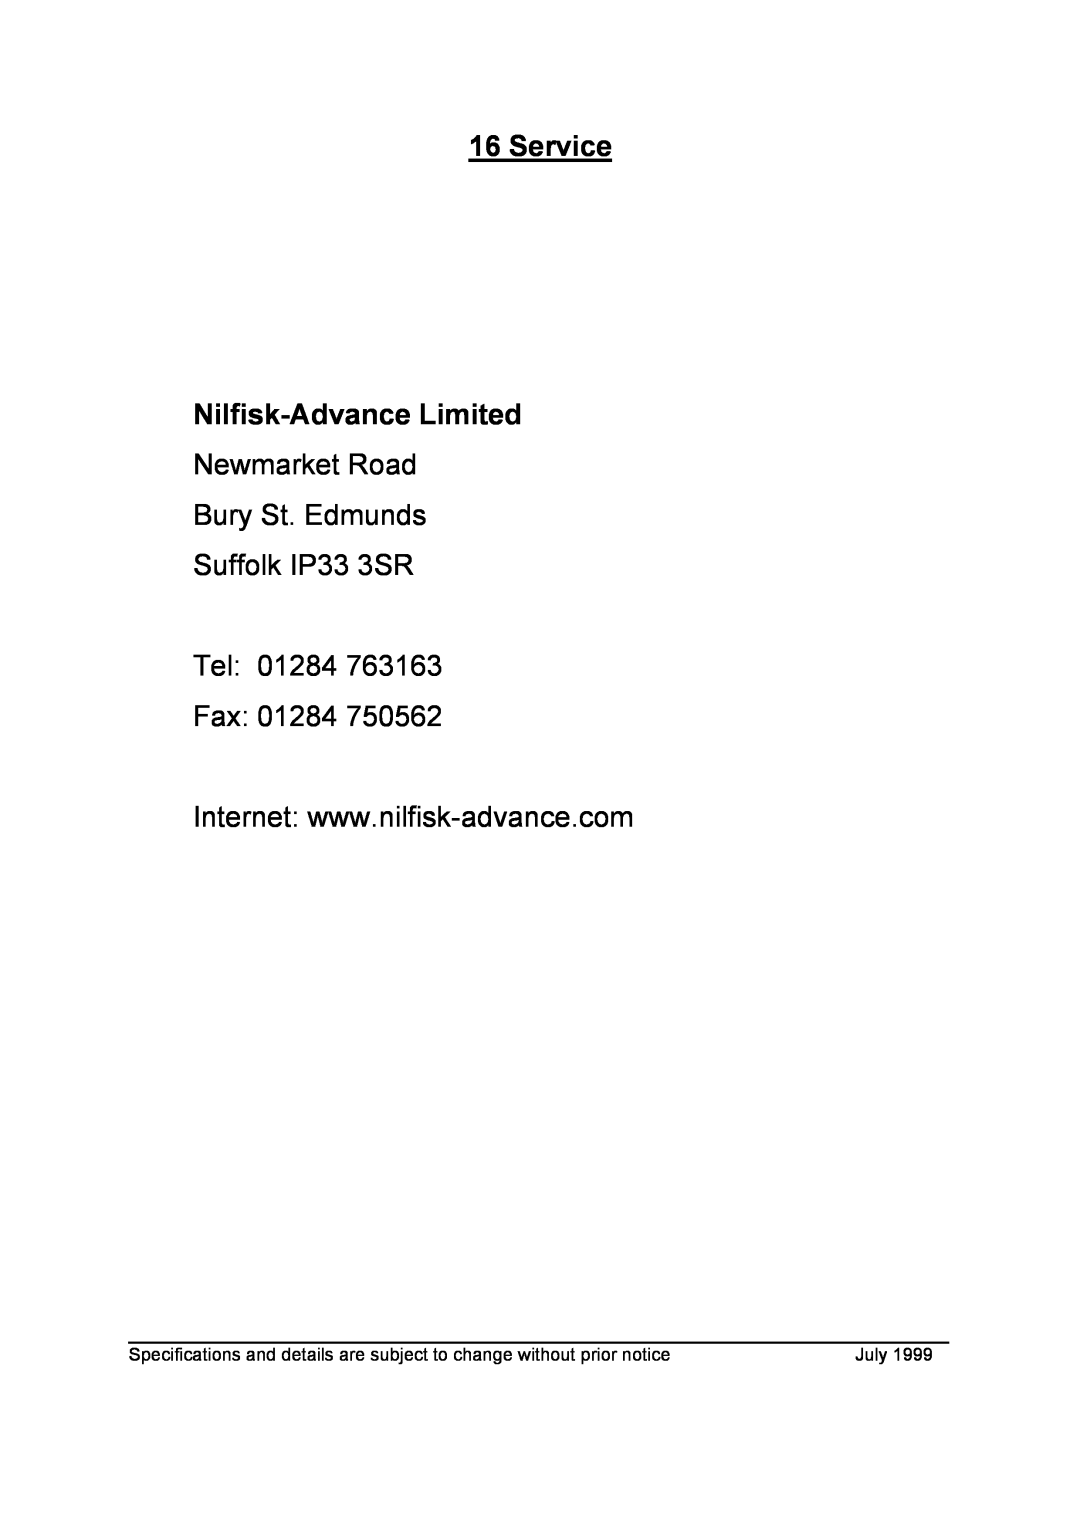 Nilfisk-Advance America GB 1133 Service Nilfisk-AdvanceLimited, Newmarket Road Bury St. Edmunds Suffolk IP33 3SR, July 